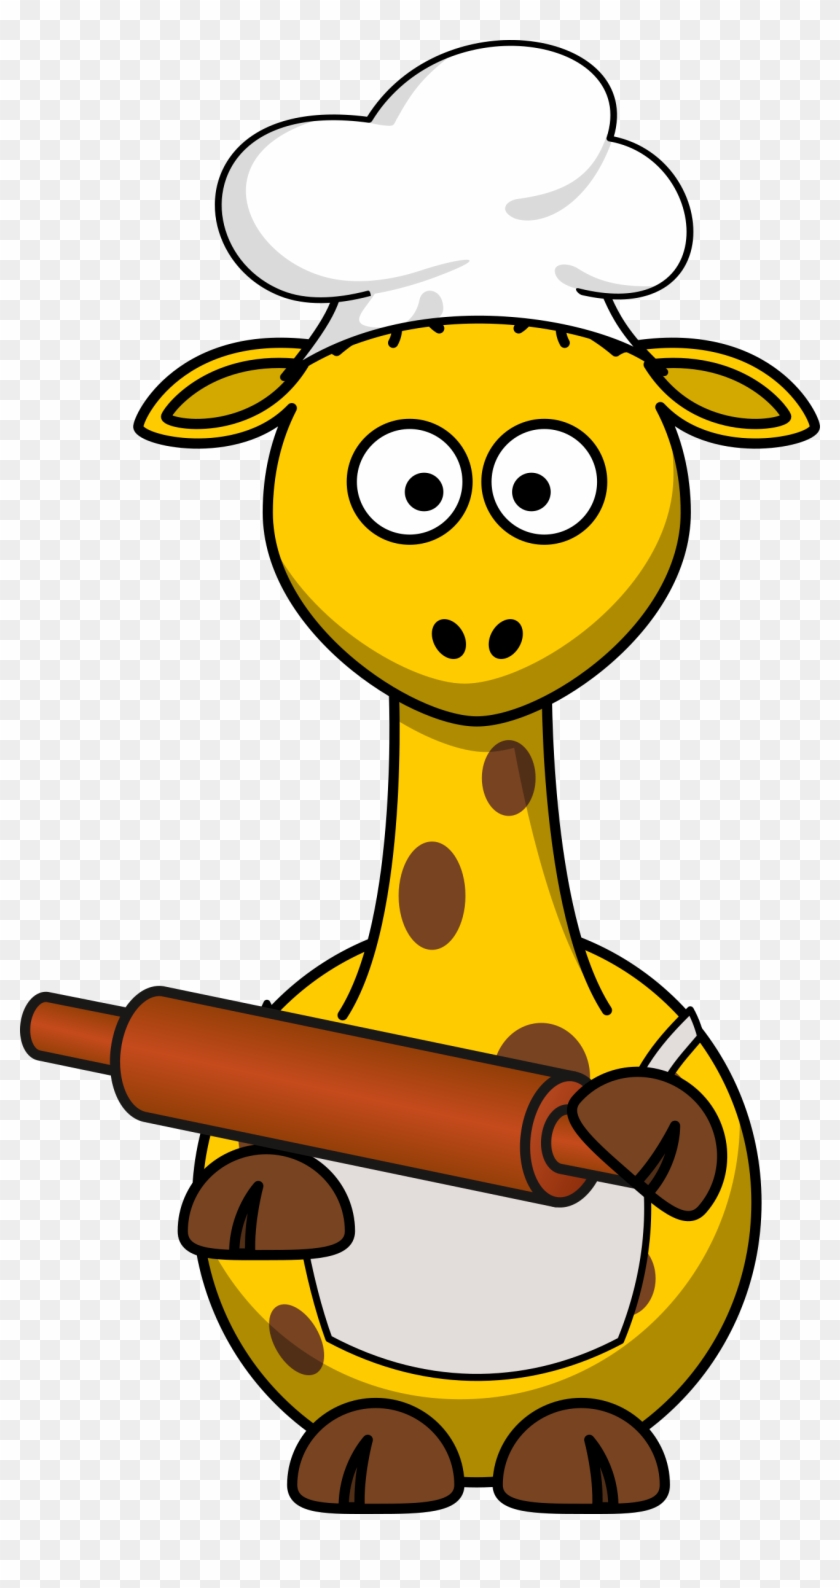 Baker - Cartoon Giraffe #193843